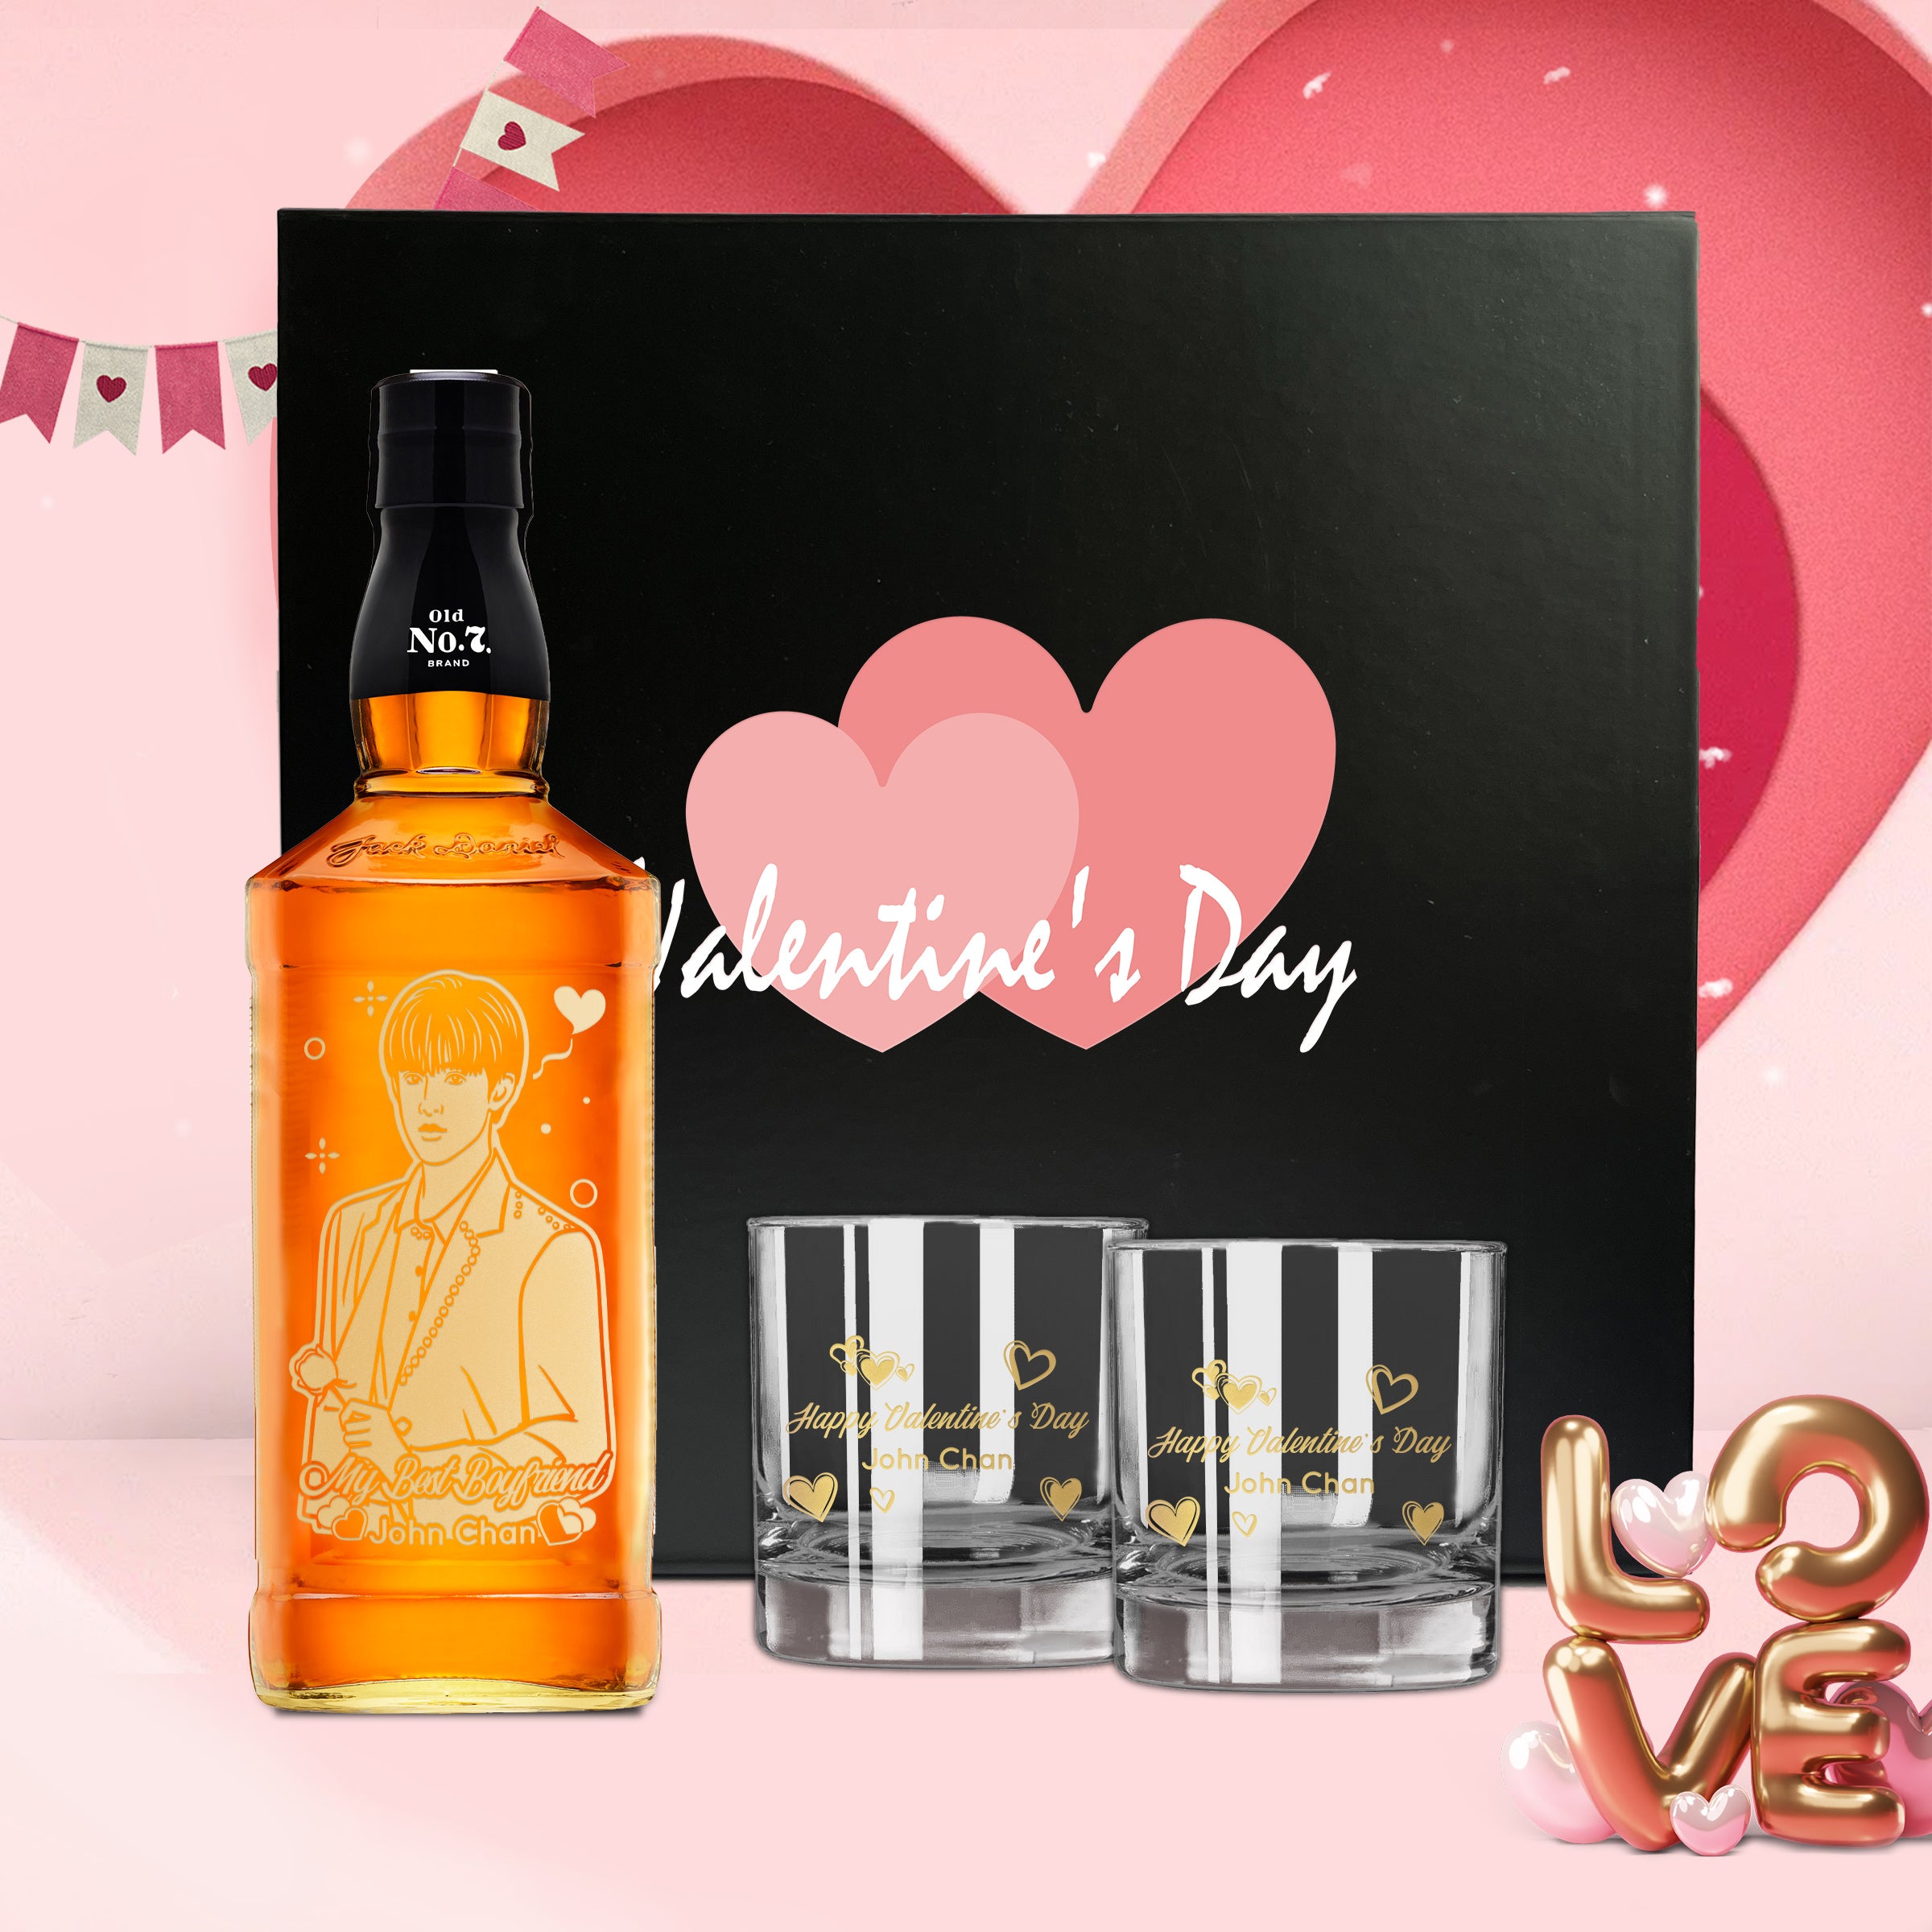 【Romantic Valentine's day】Jack Daniel’s Old No.7 Whiskey Gift Set 情人節禮物 送男友 - Design Your Own Wine